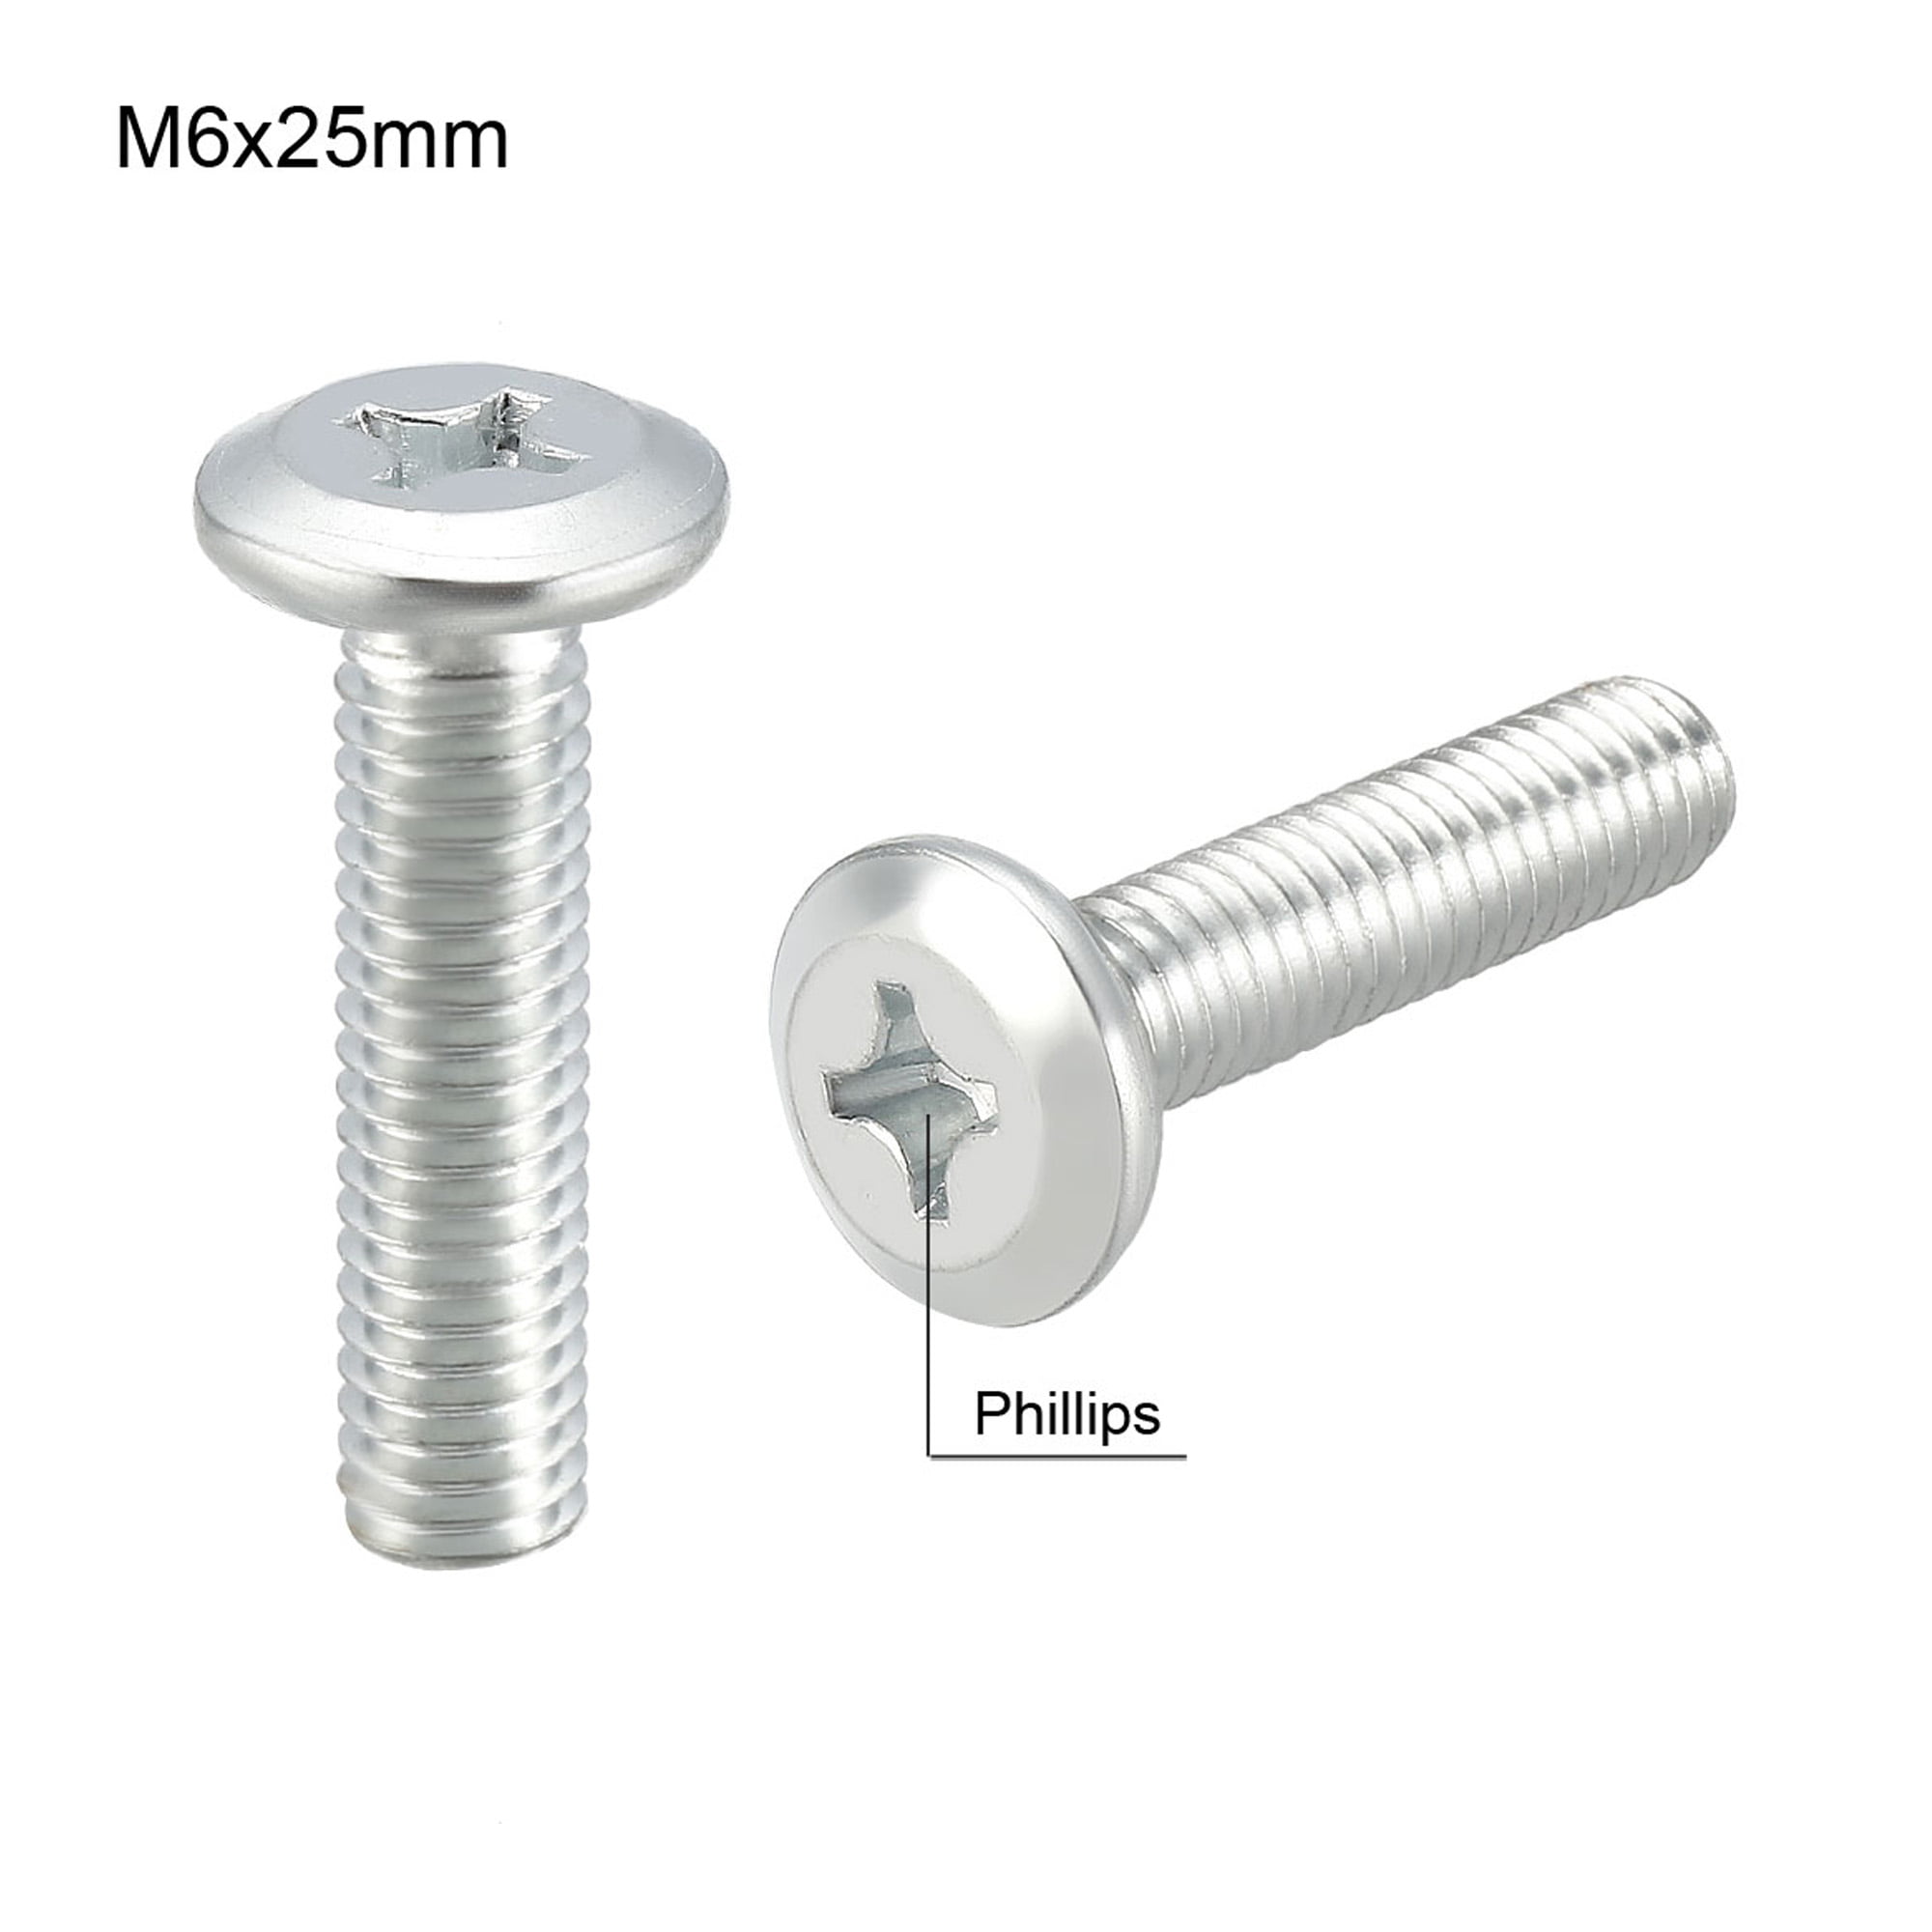 Details about   M8x25mm Phillips Head Machine Screws Zinc Plated Cross Screw Full Thread 10Pcs